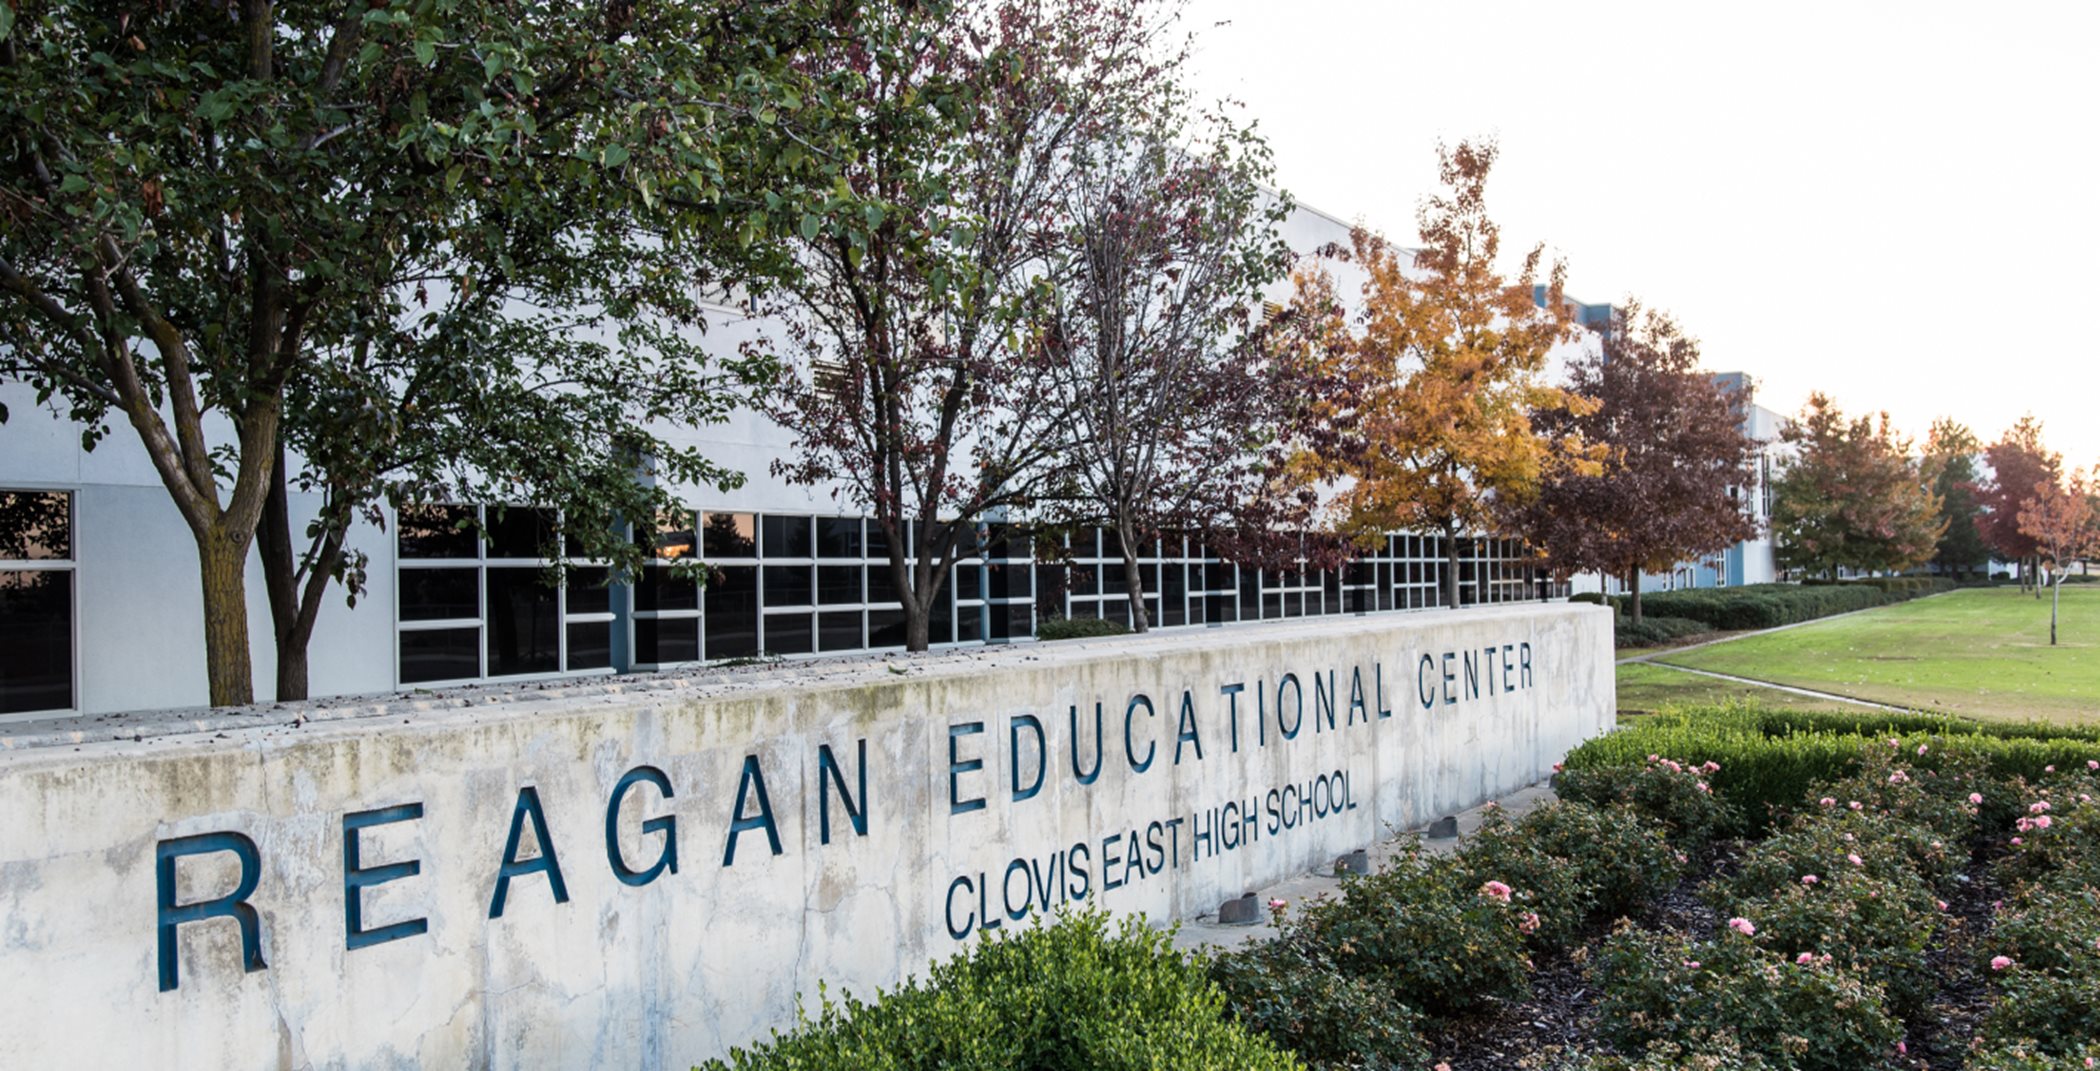 Reagan Educational Center monument sign